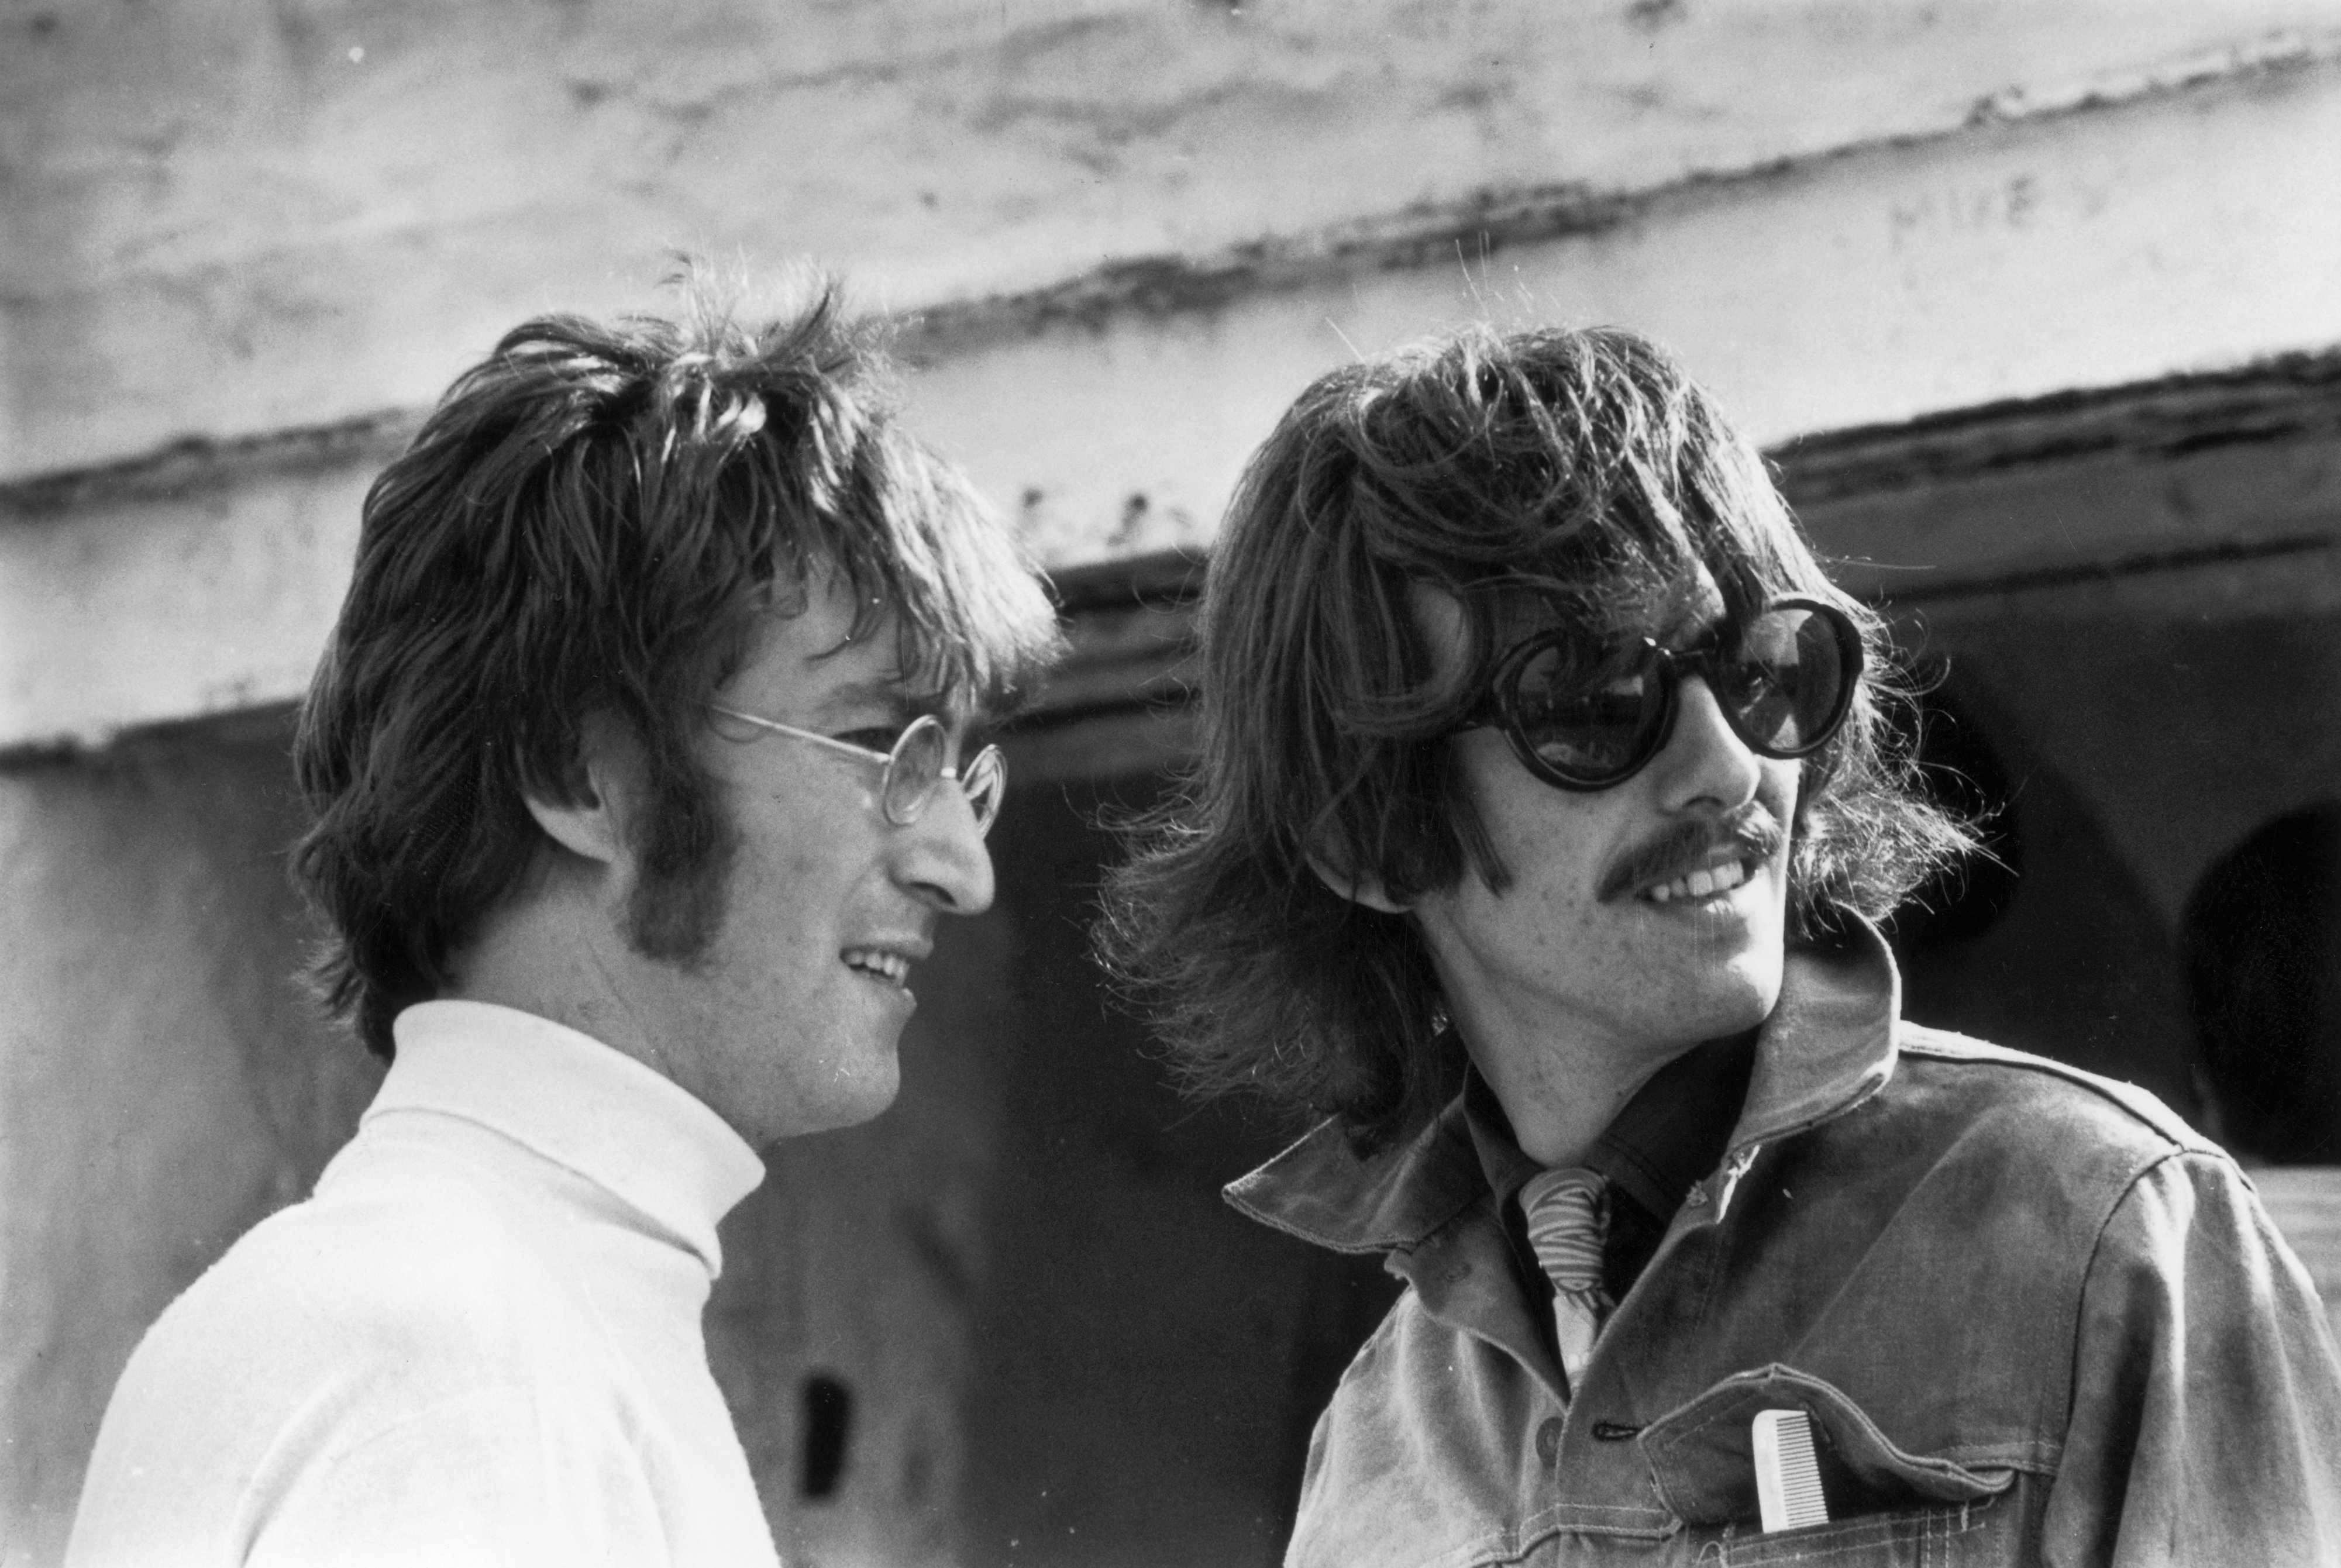 The Beatles' John Lennon and George Harrison standing